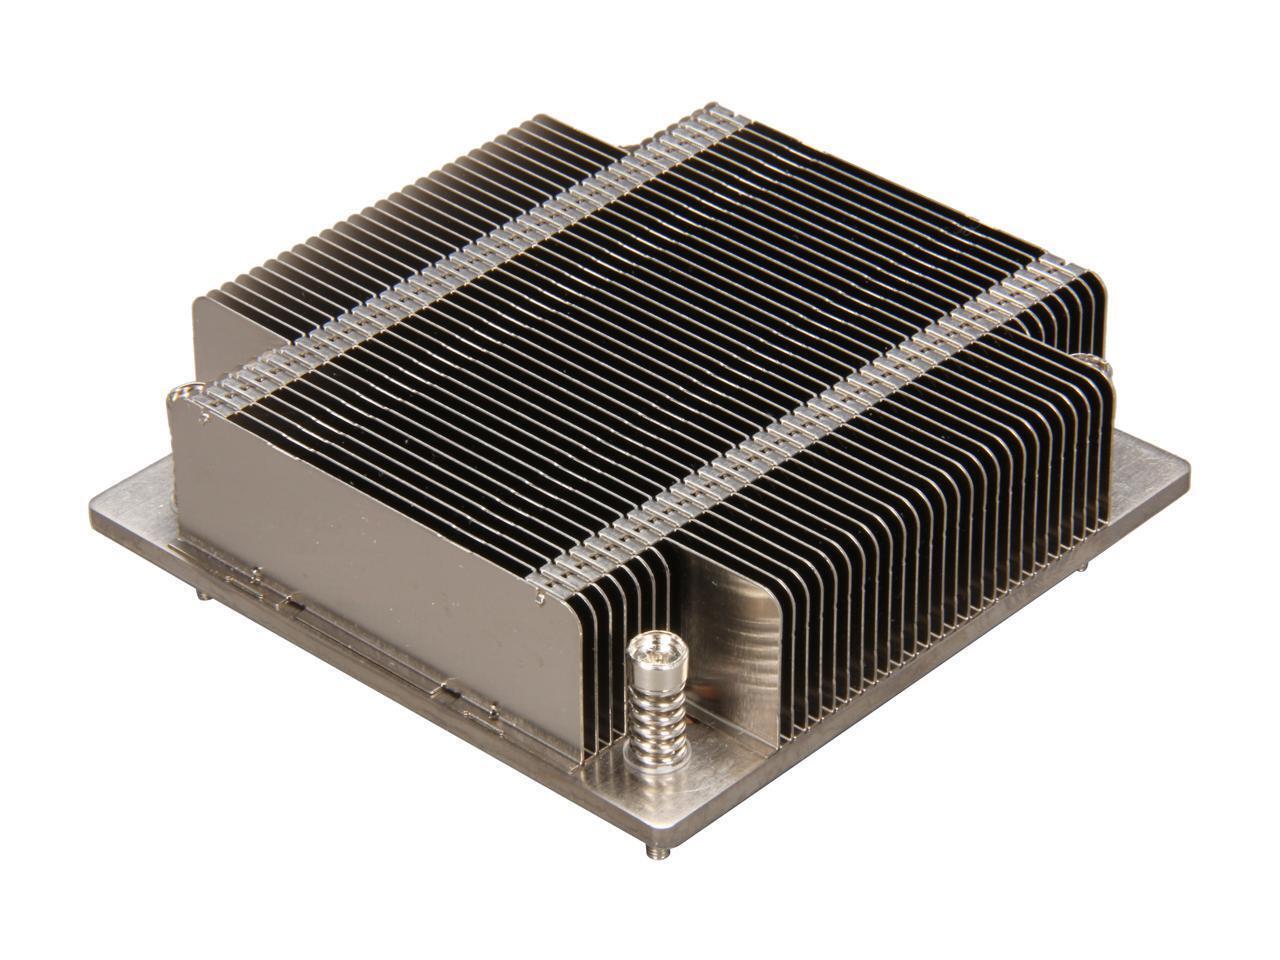 SUPERMICRO SNK-P0046P CPU Heatsink for Xeon Processor X3400 / L3400 Series